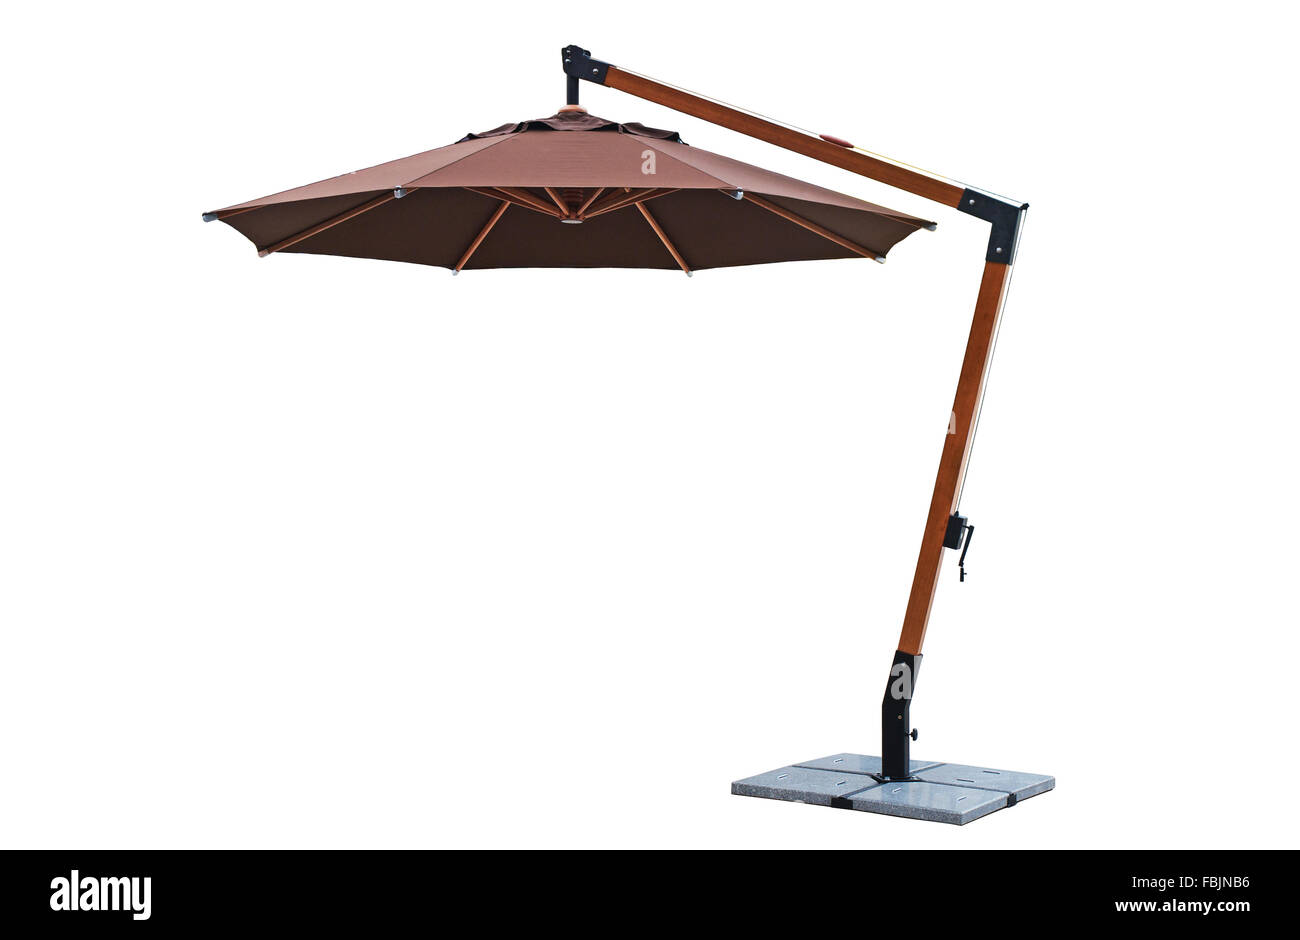 Umbrella use with garden furniture on white background Stock Photo